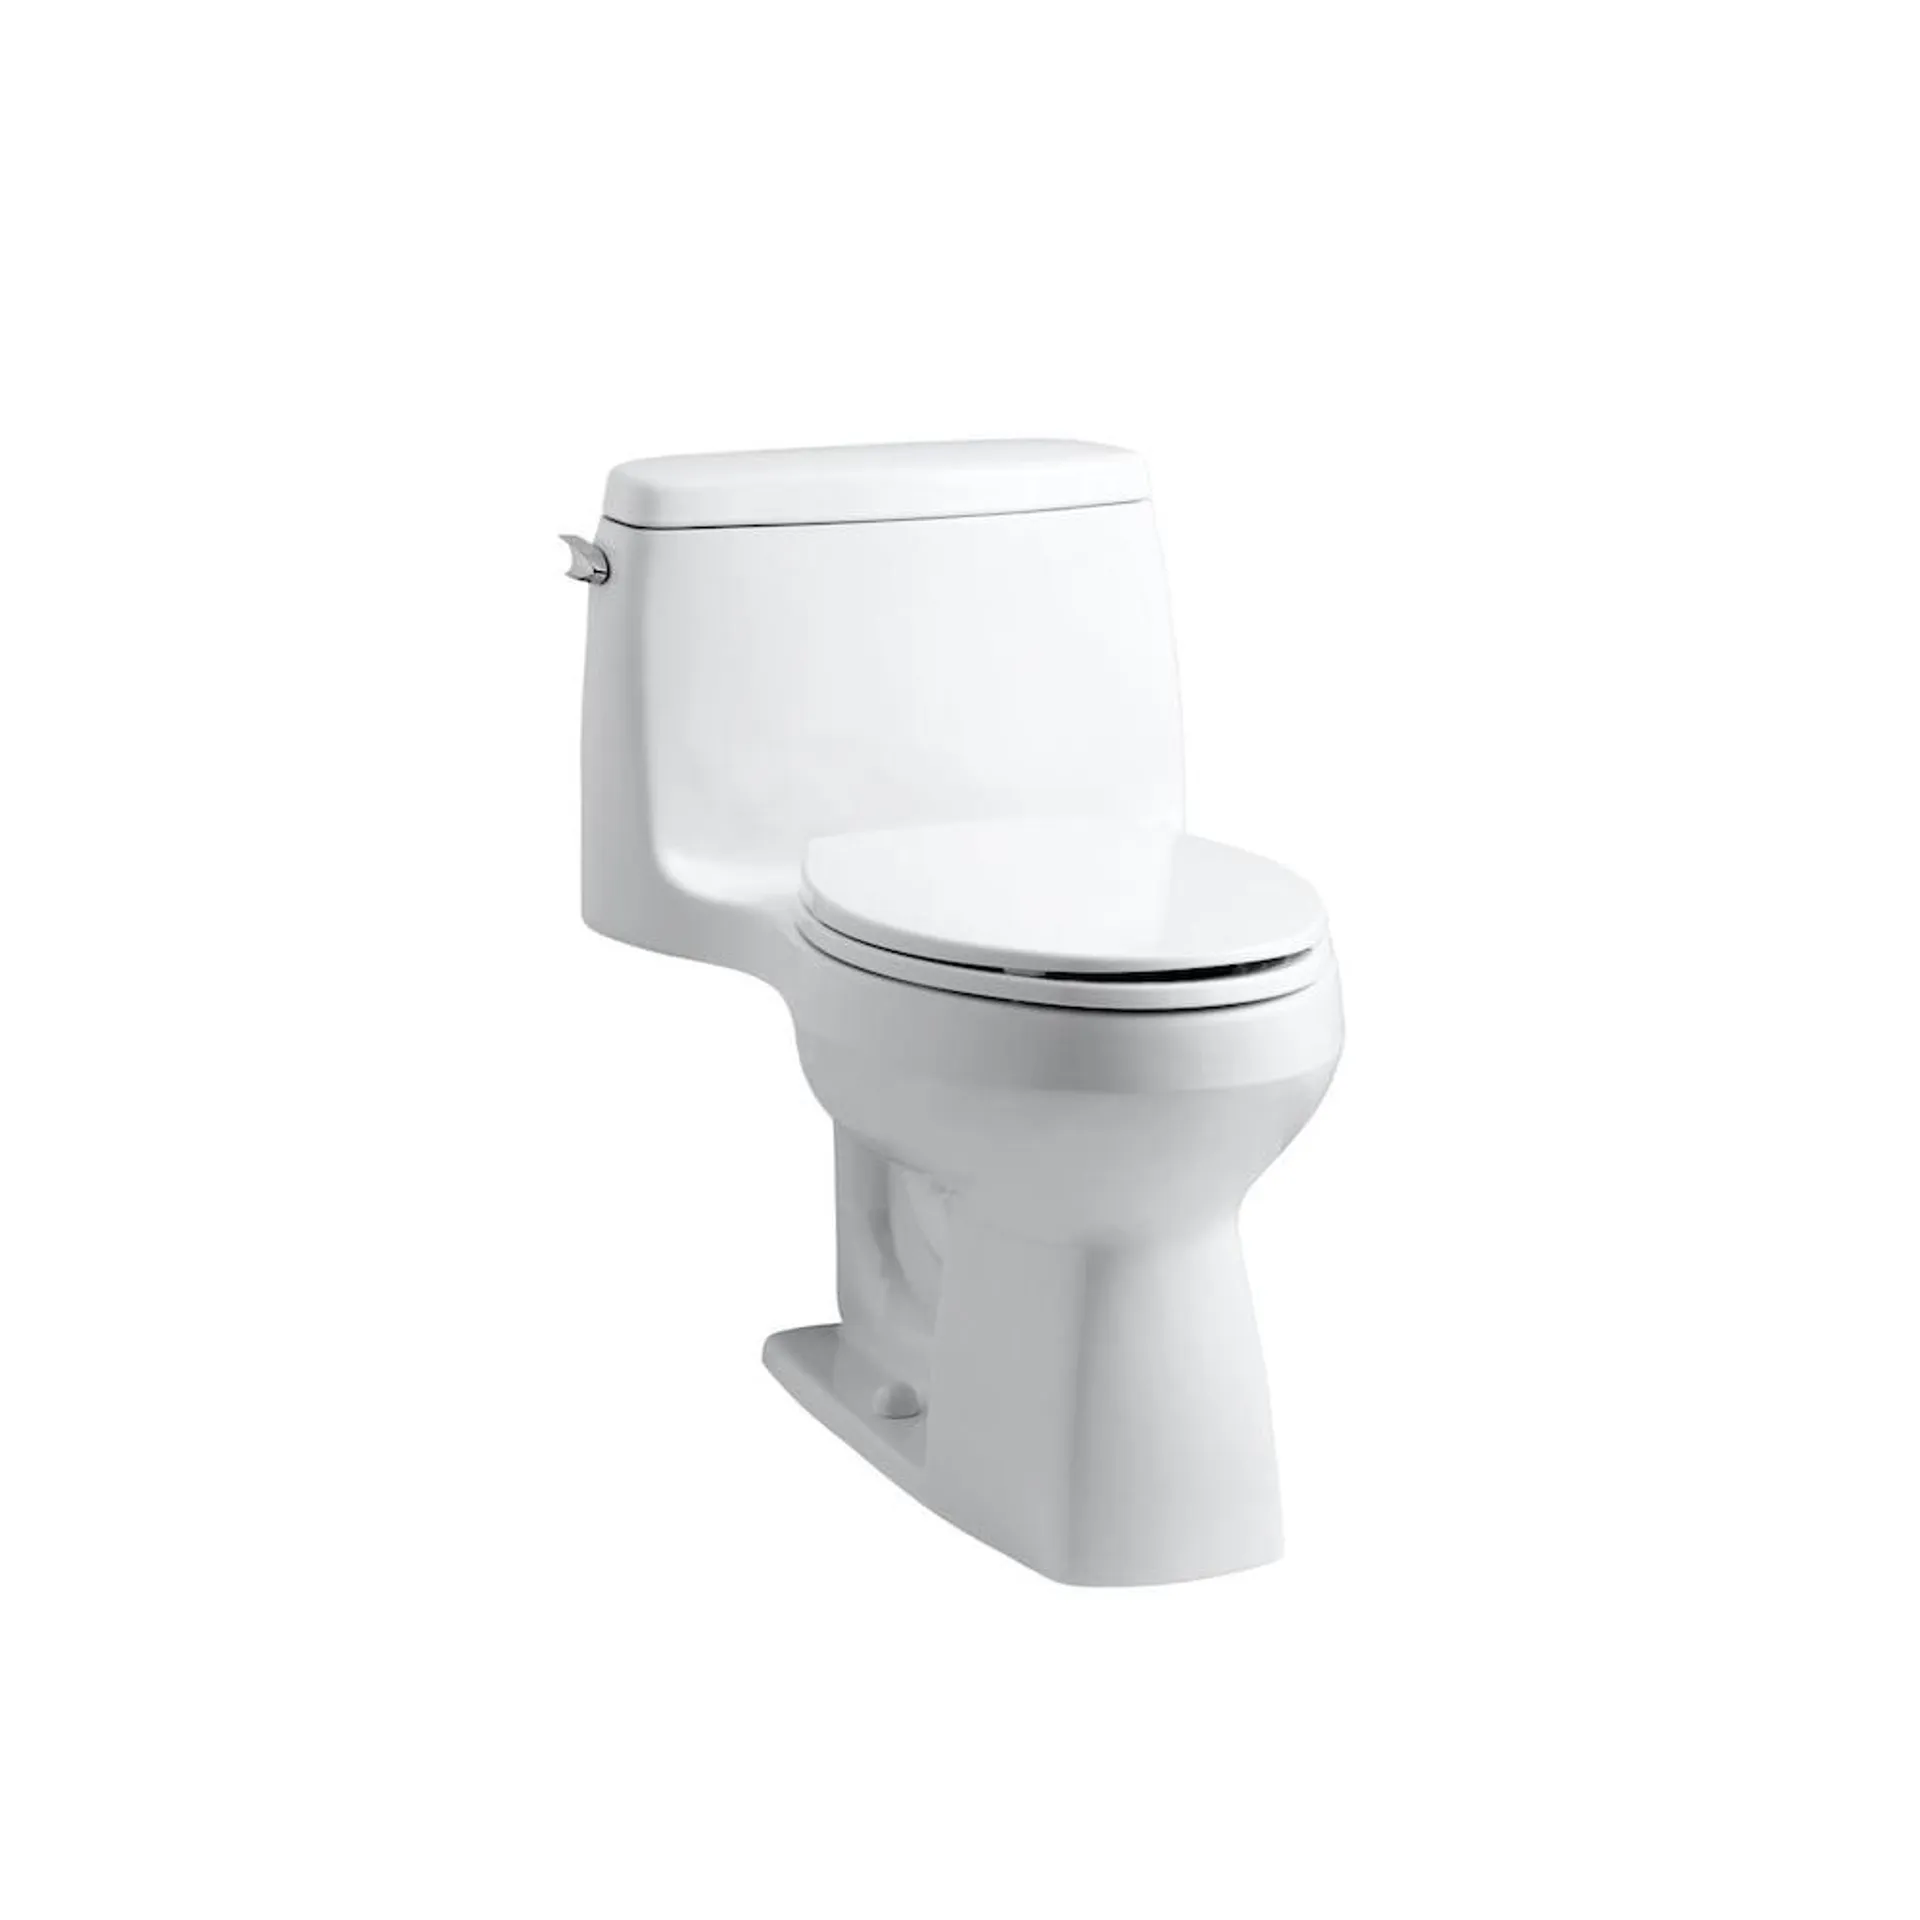 Santa Rosa Comfort Height 1-Piece 4.8 LPF Single Flush Compact Elongated Toilet in White